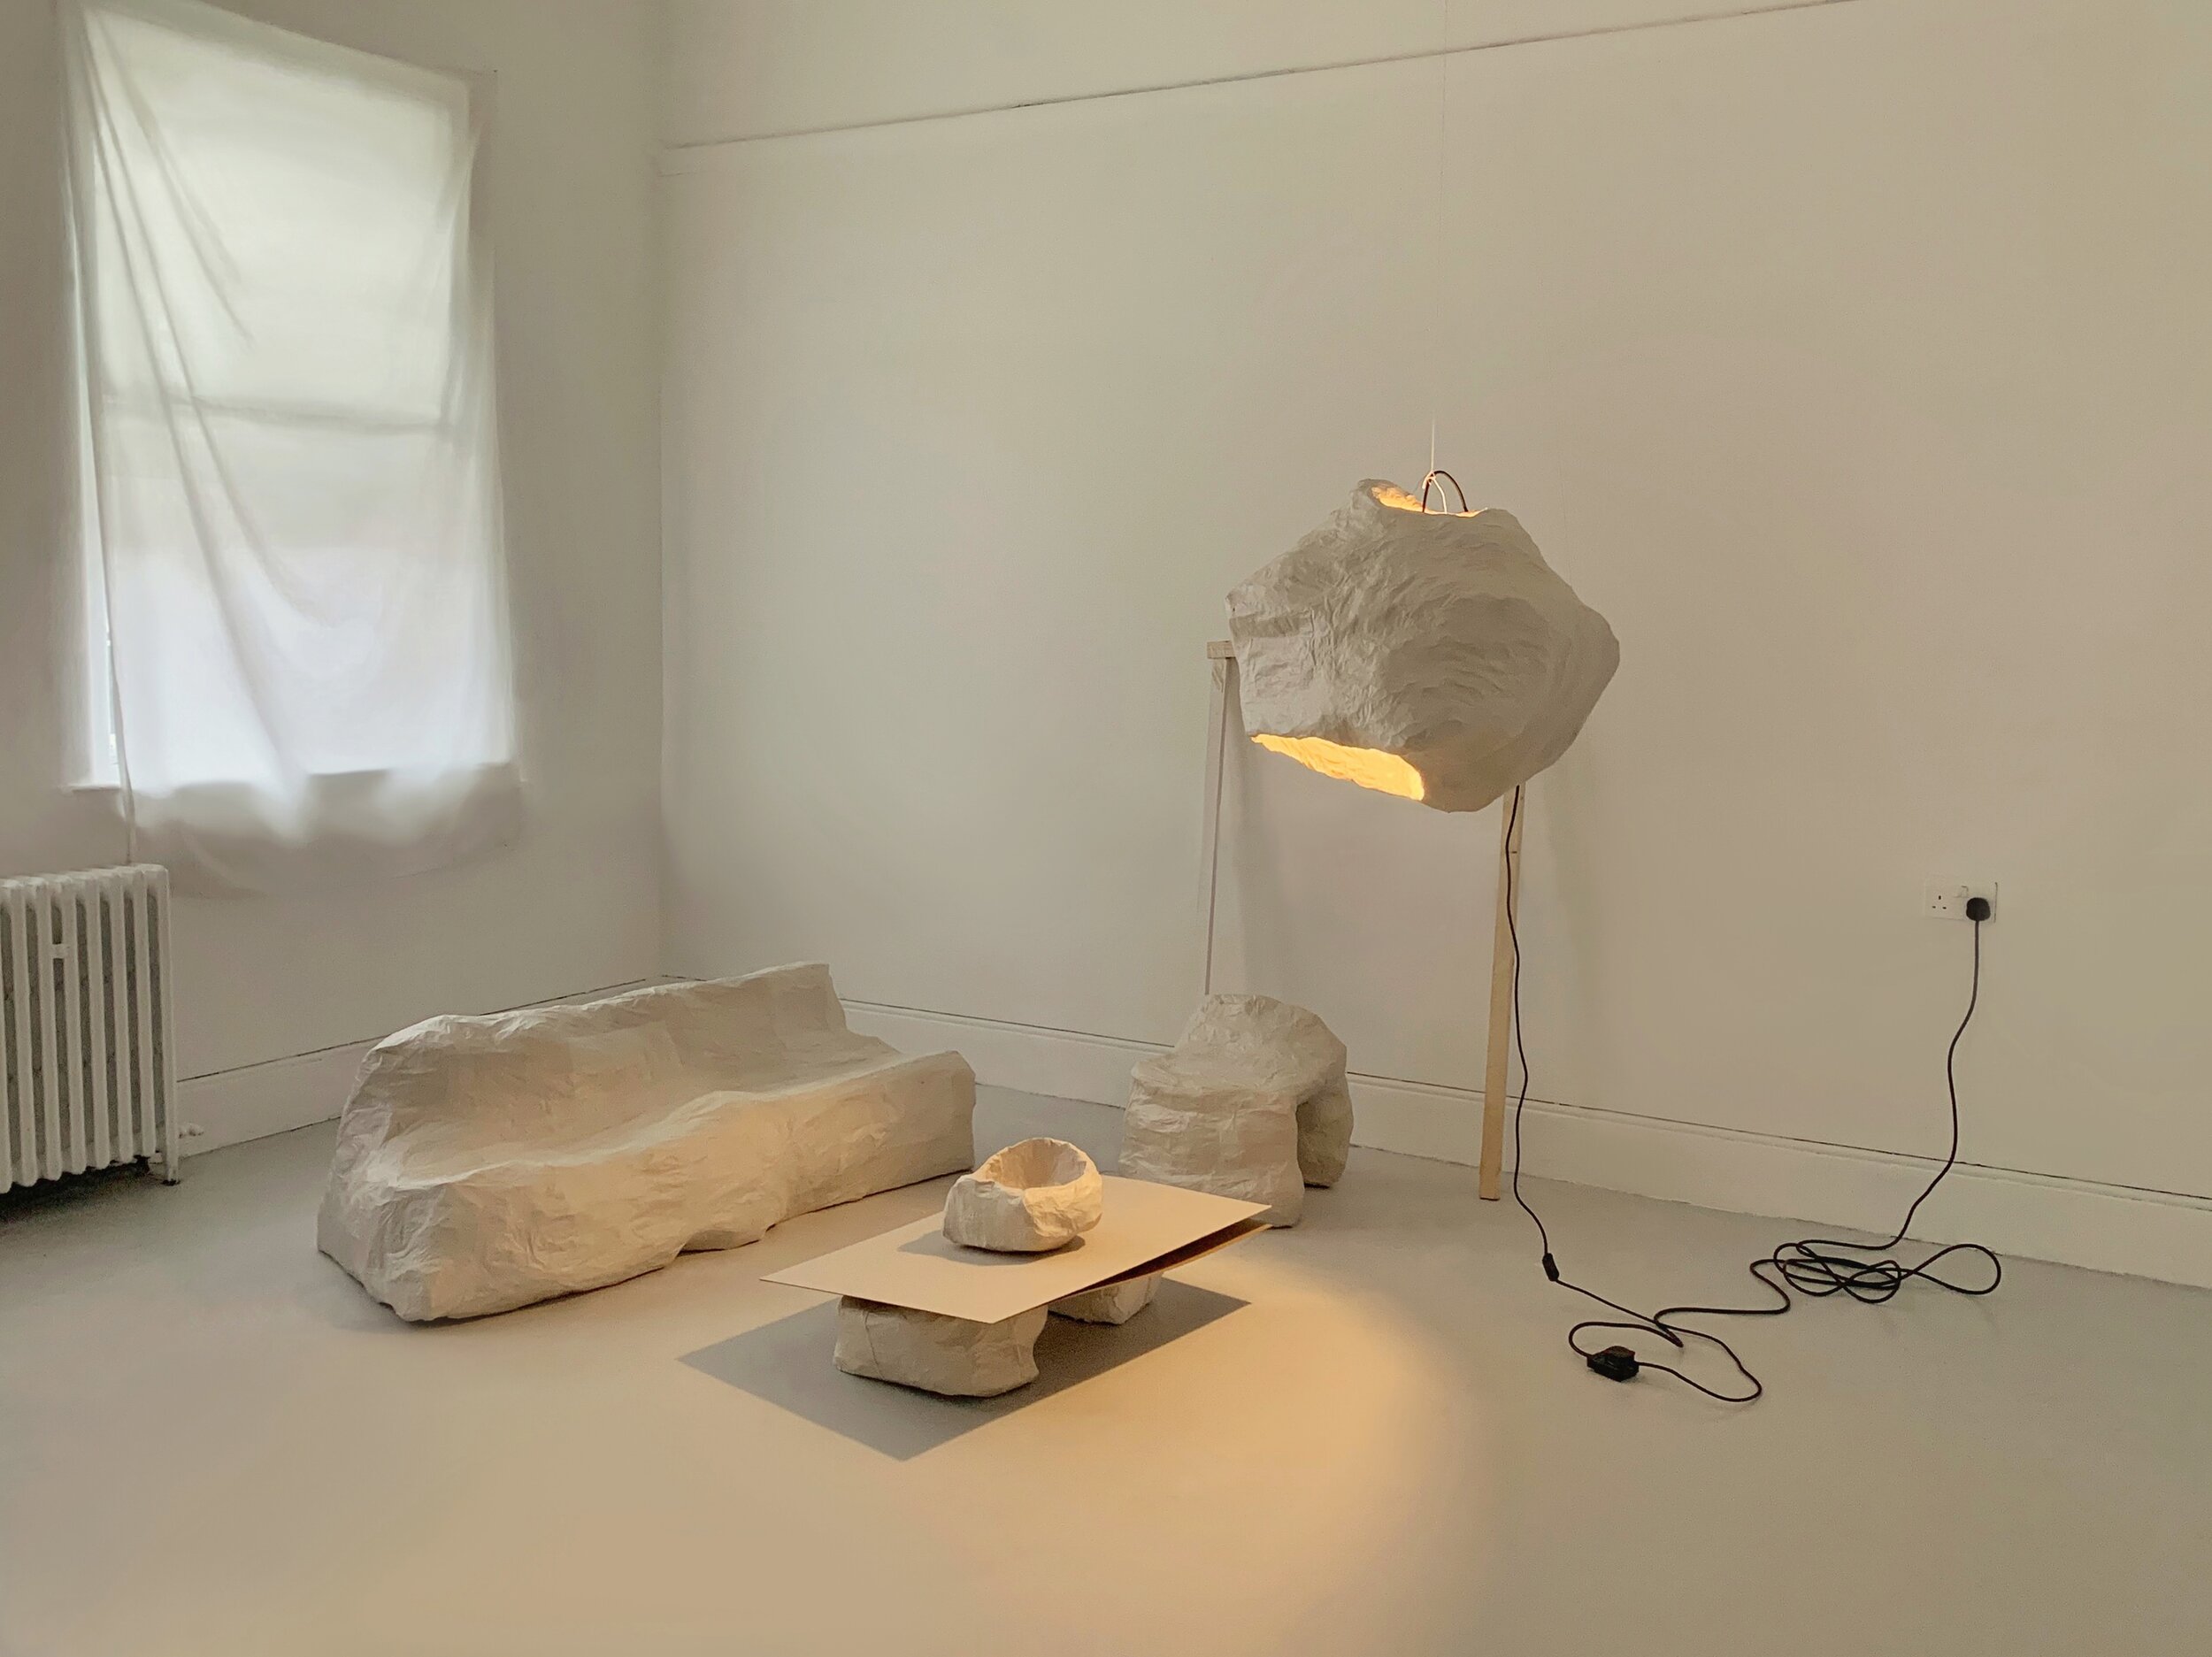   Untitled  (2019)                                                                            newsprint, flour, tape, string, wire, cardboard, wood, lightbulb 